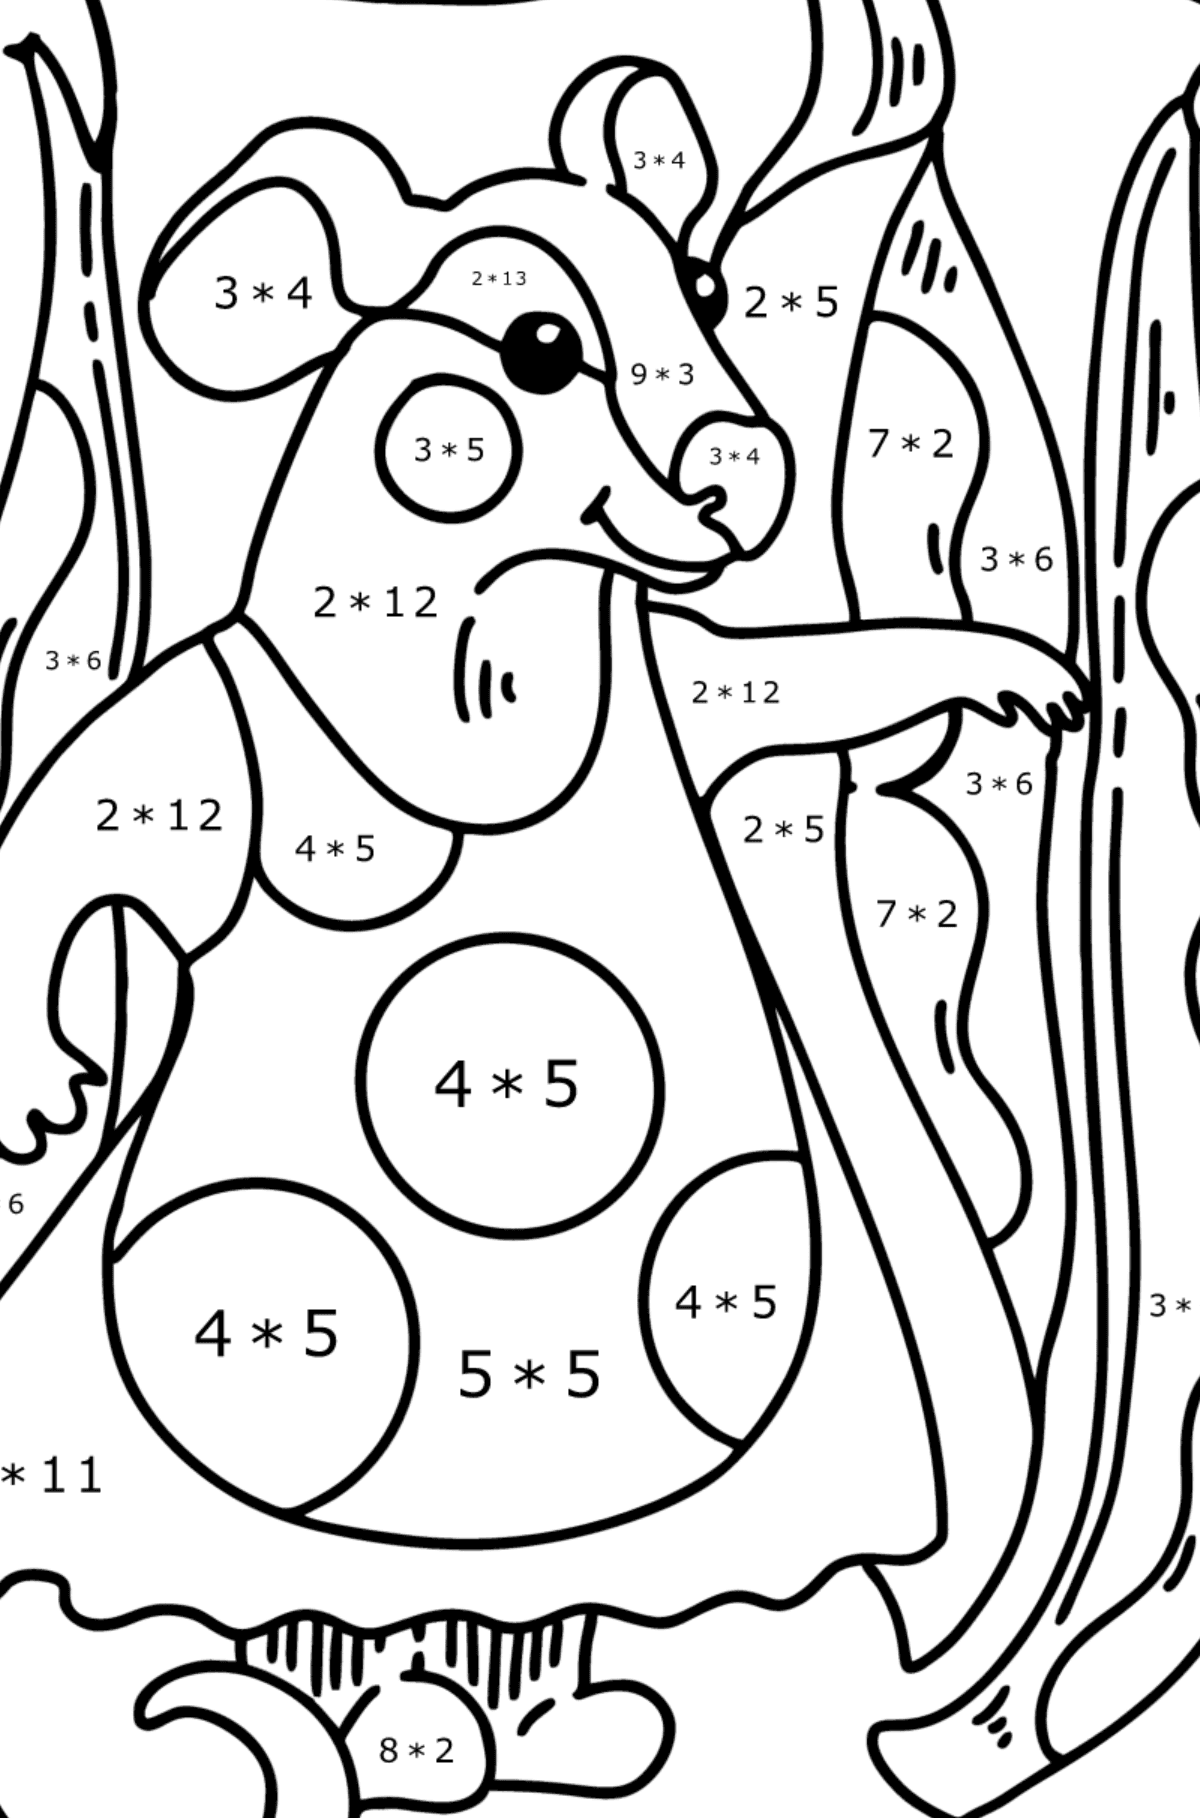 Ausmalbild - Süße Maus - Mathe Ausmalbilder - Multiplikation für Kinder